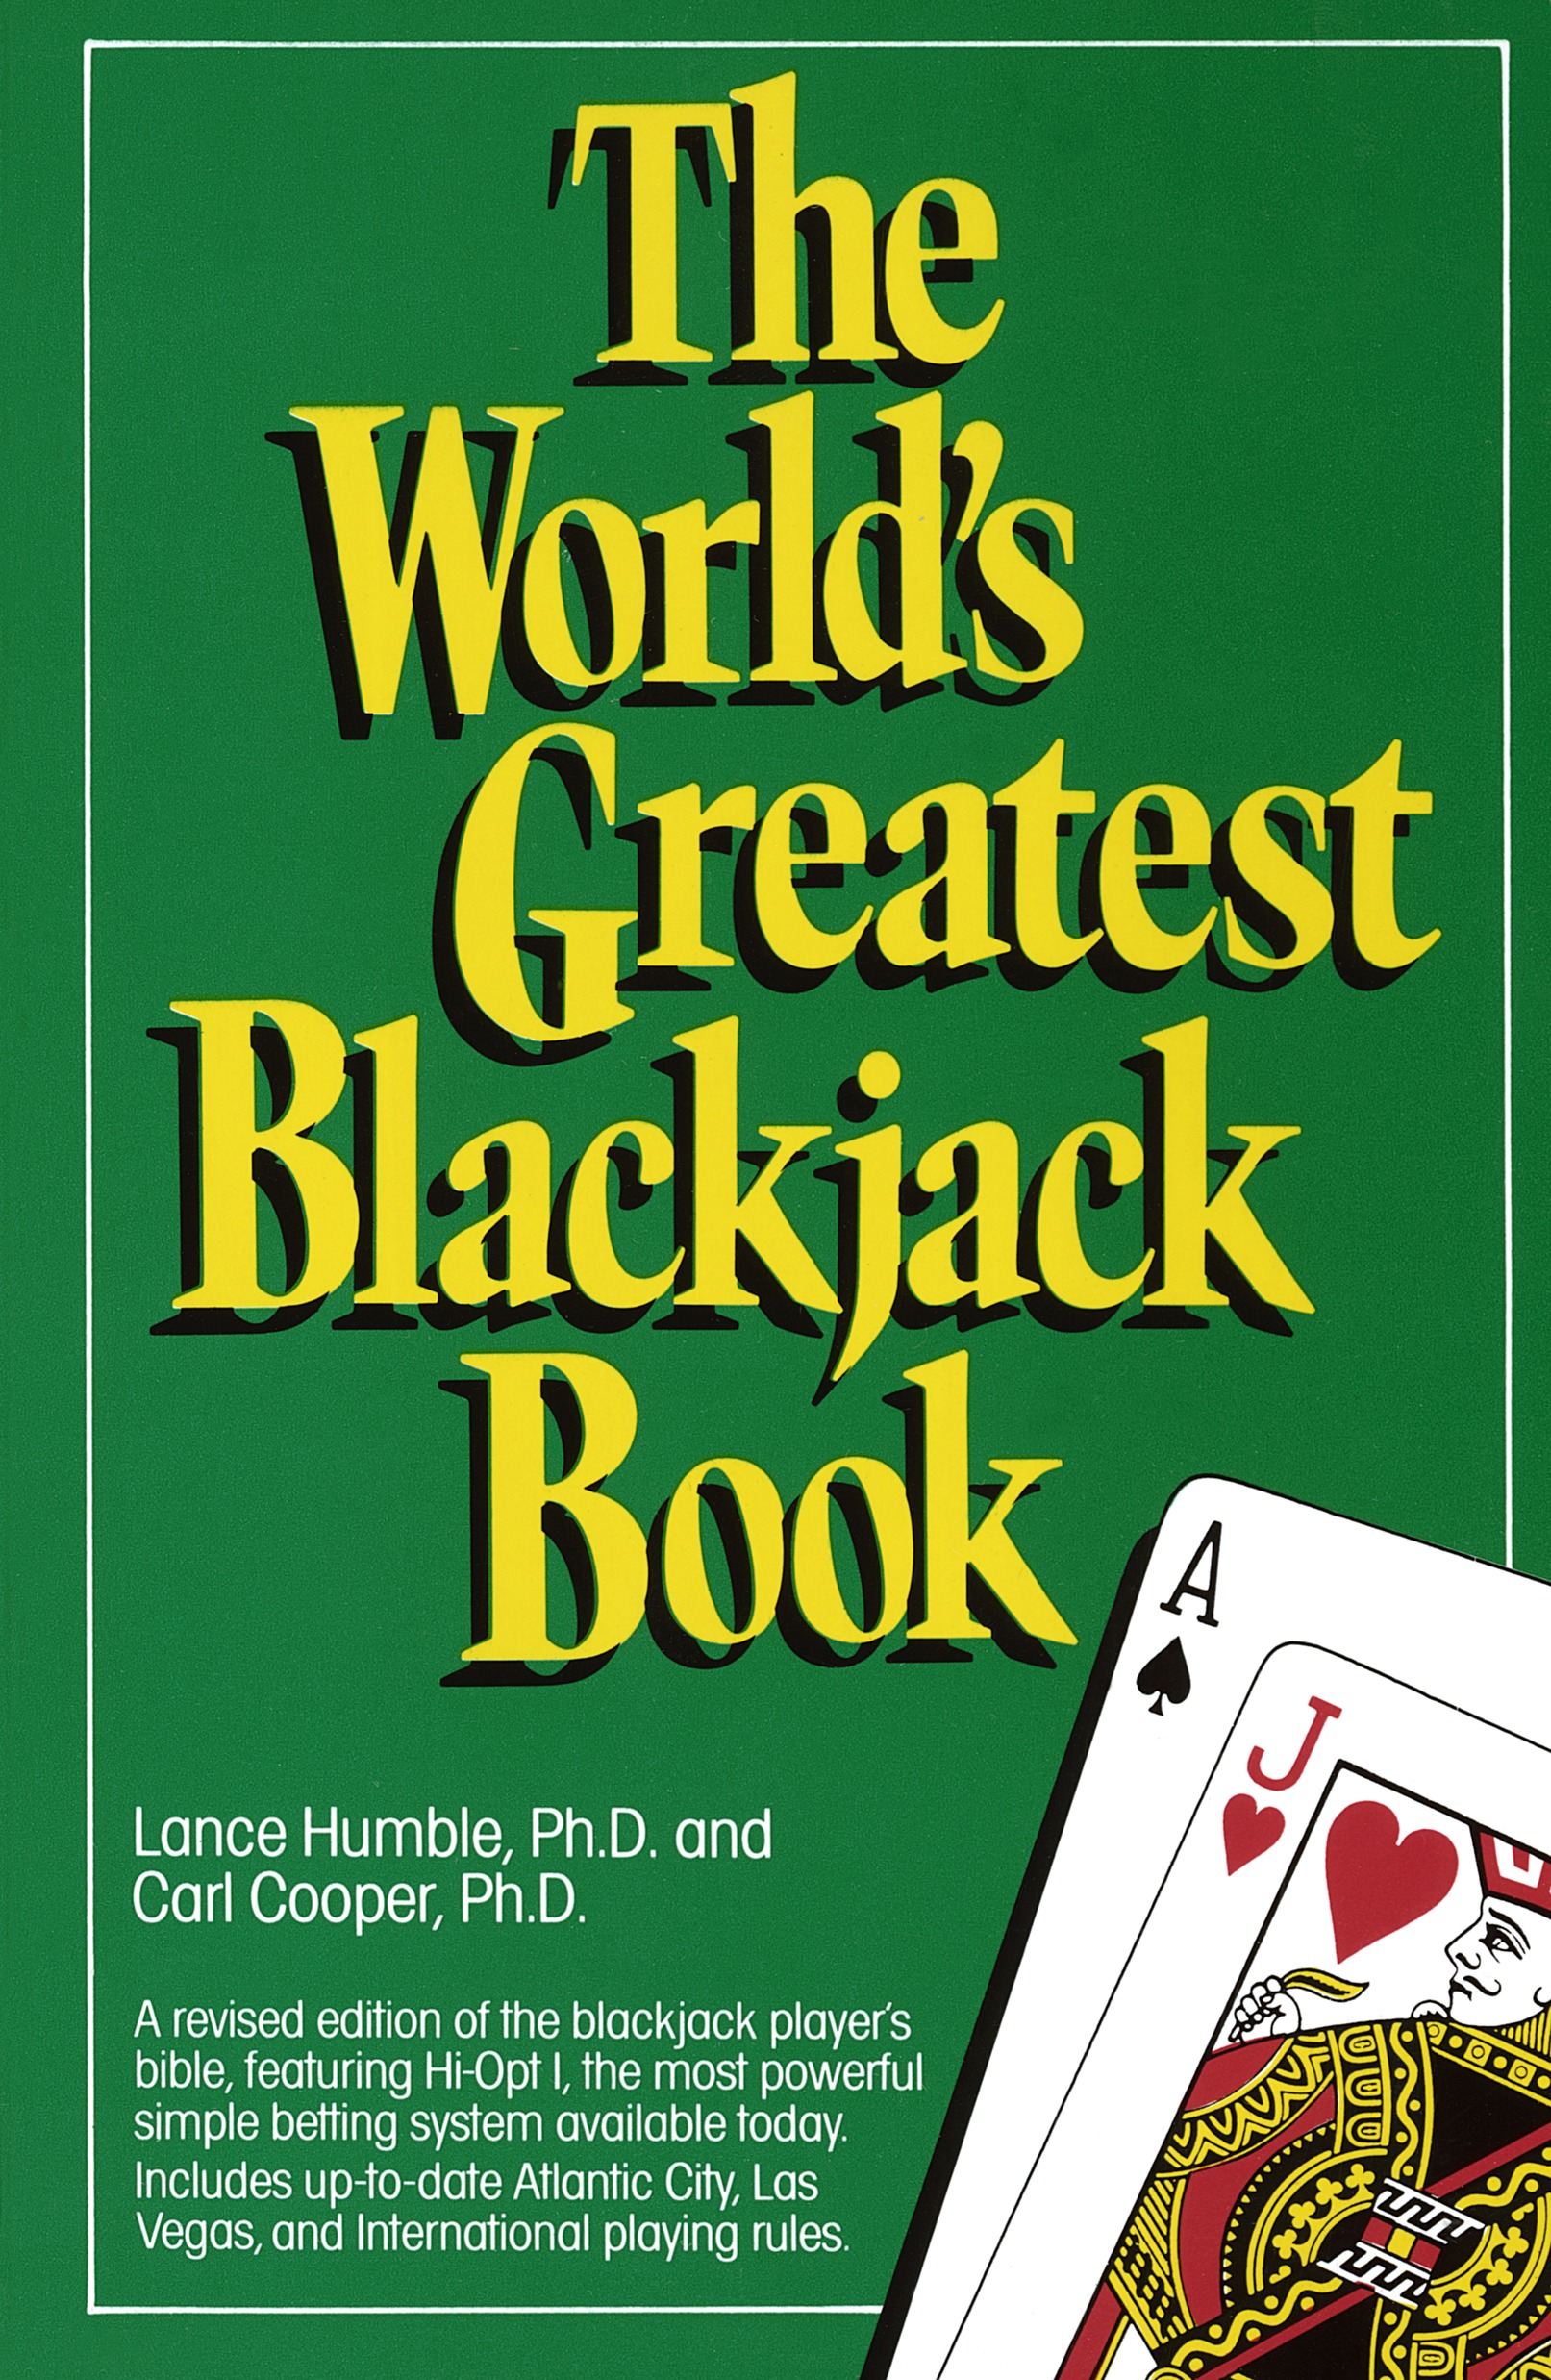 The Rules of Chess eBook by Bruce Pandolfini - EPUB Book